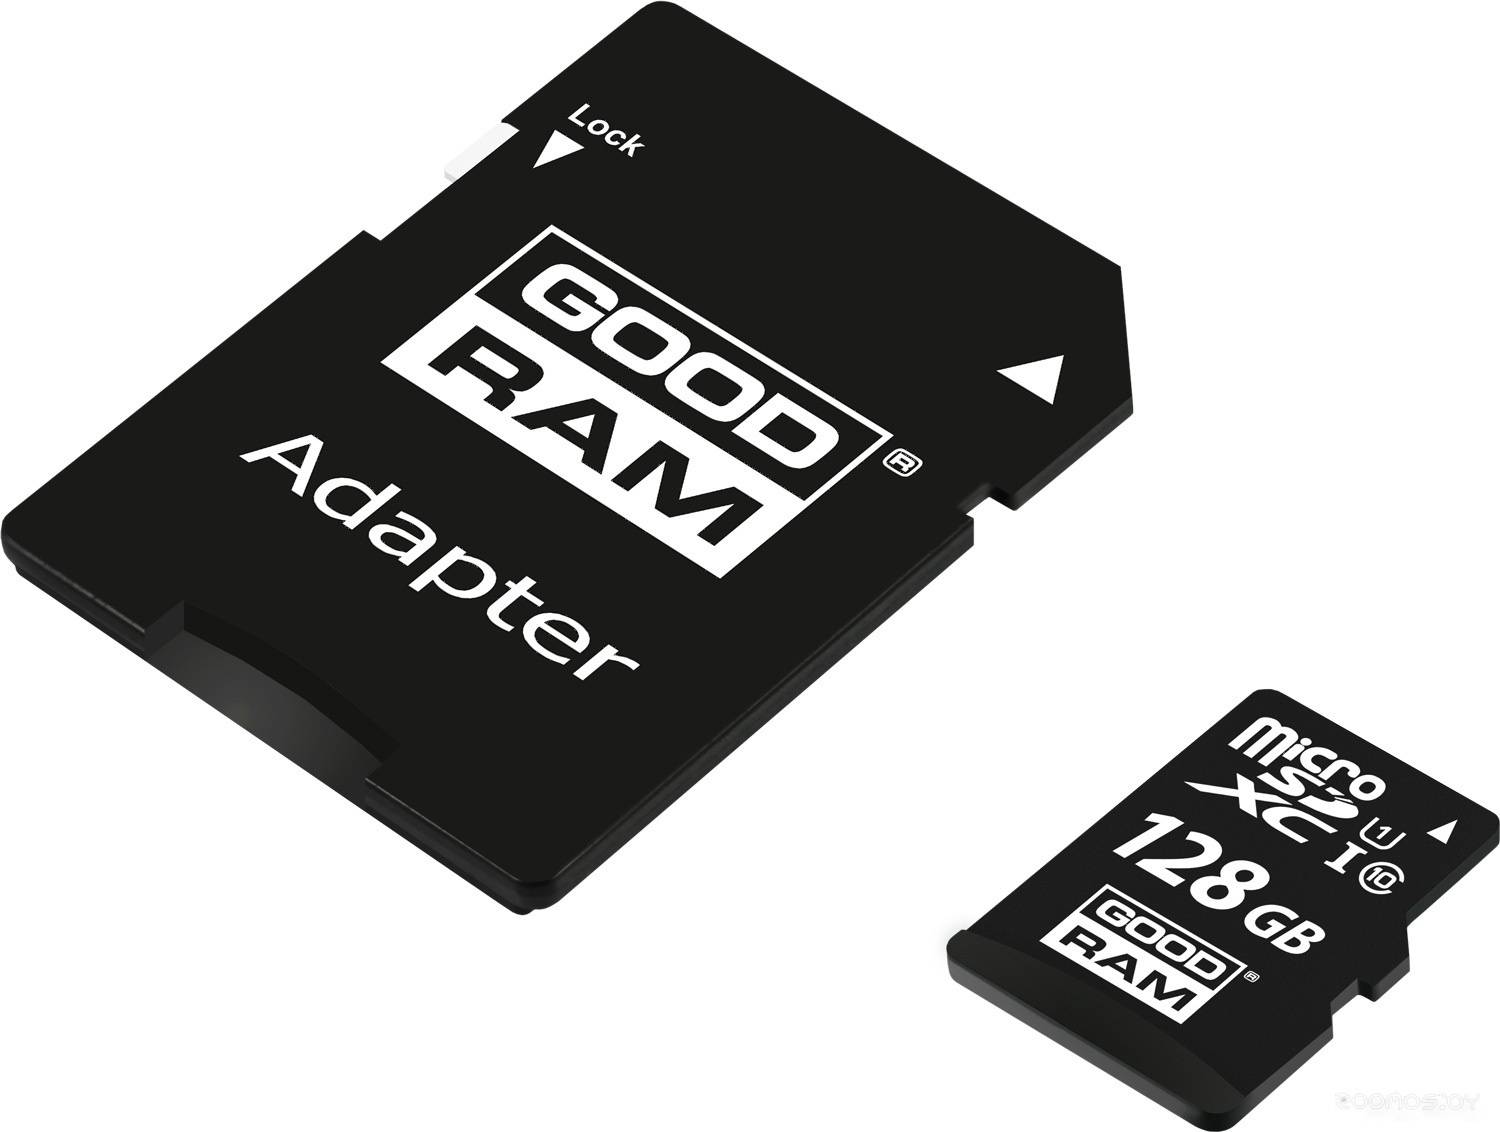   GoodRAM M1AA microSDXC M1AA-1280R12 128GB ( )     